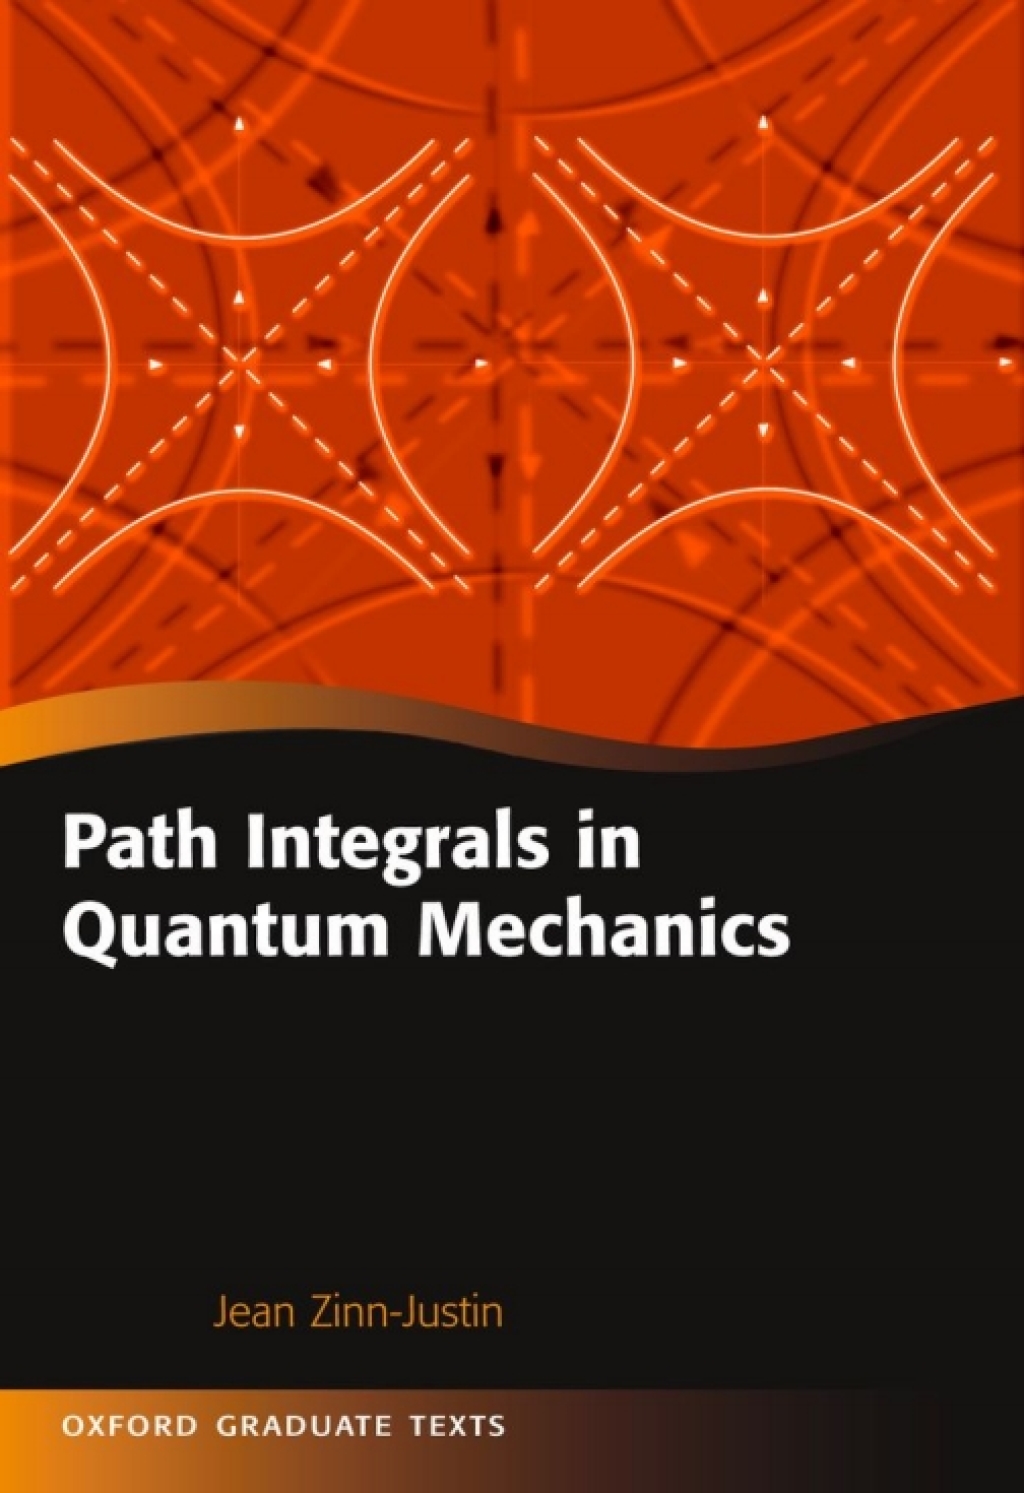 Path Integrals in Quantum Mechanics (eBook Rental) - Jean Zinn-Justin,